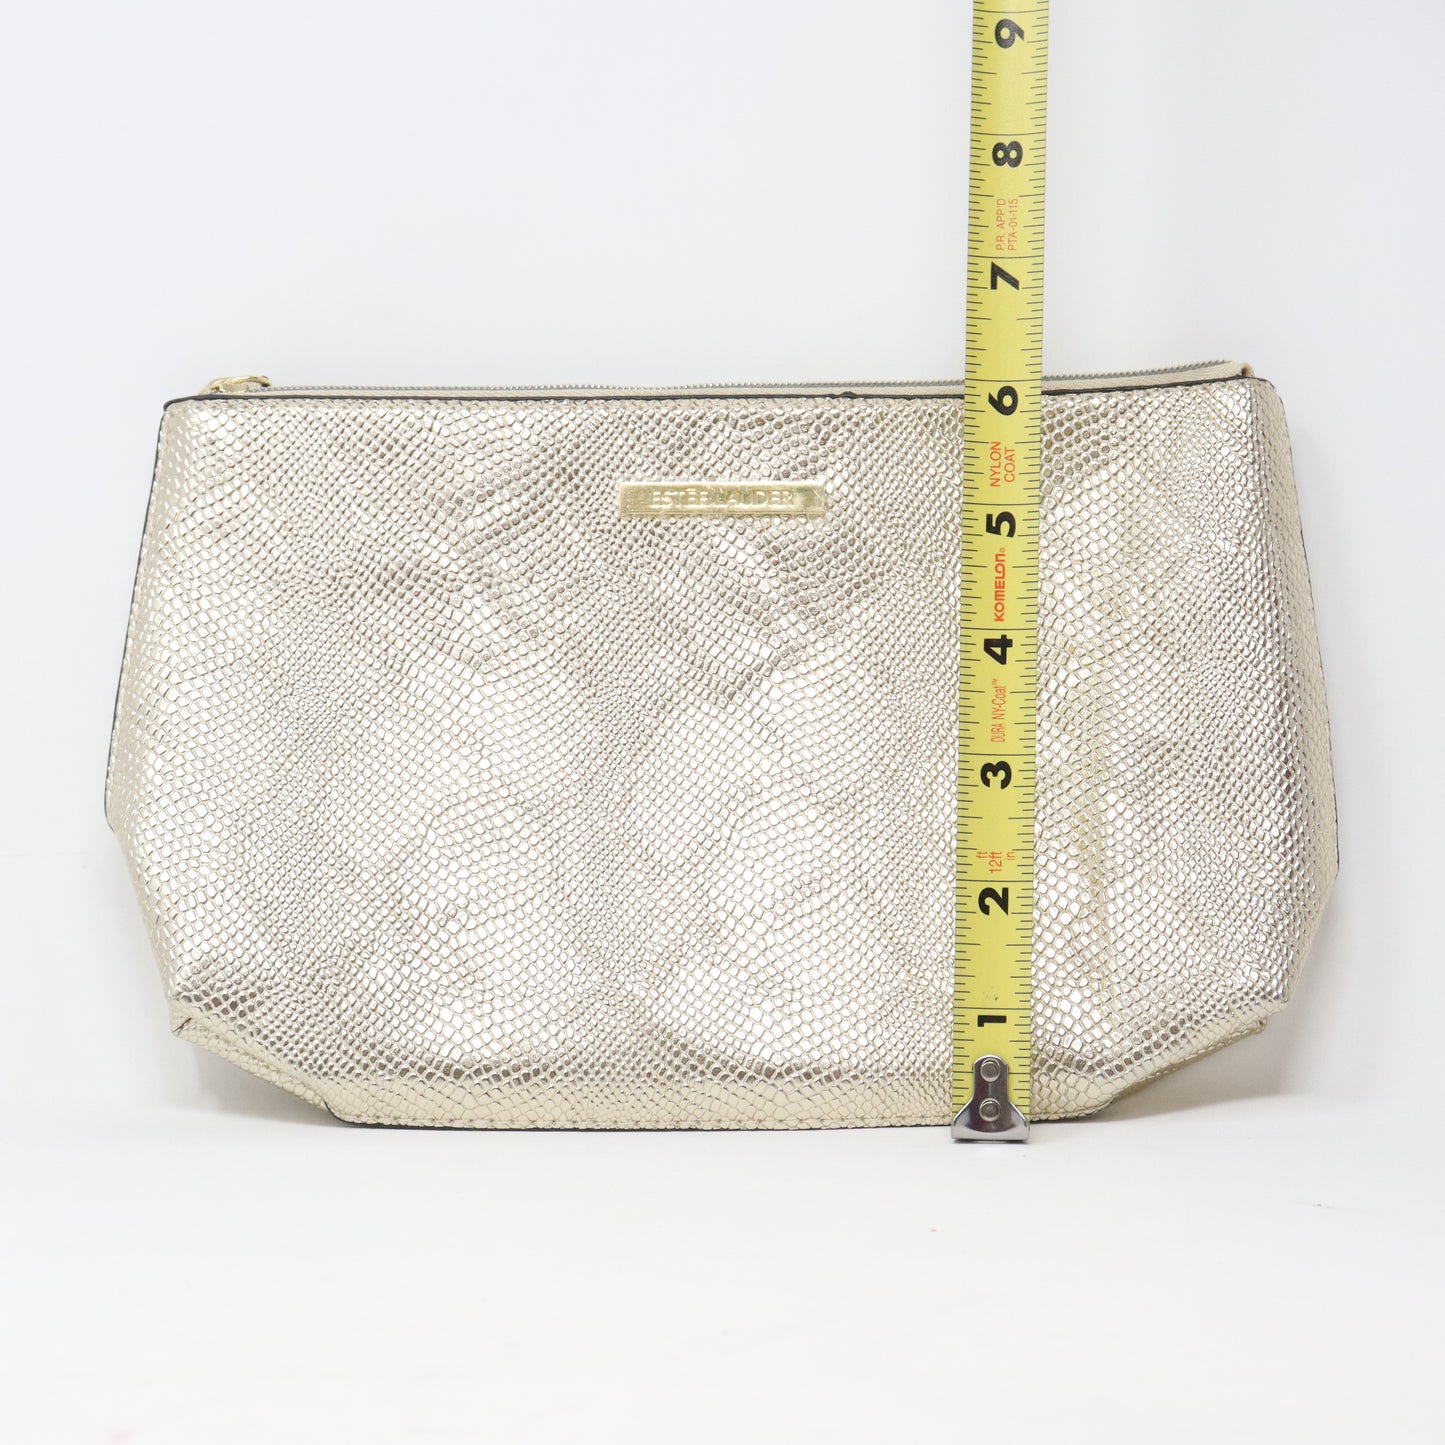 Estee Lauder Metallic Textured Snake Print Cosmetic Bag  / New